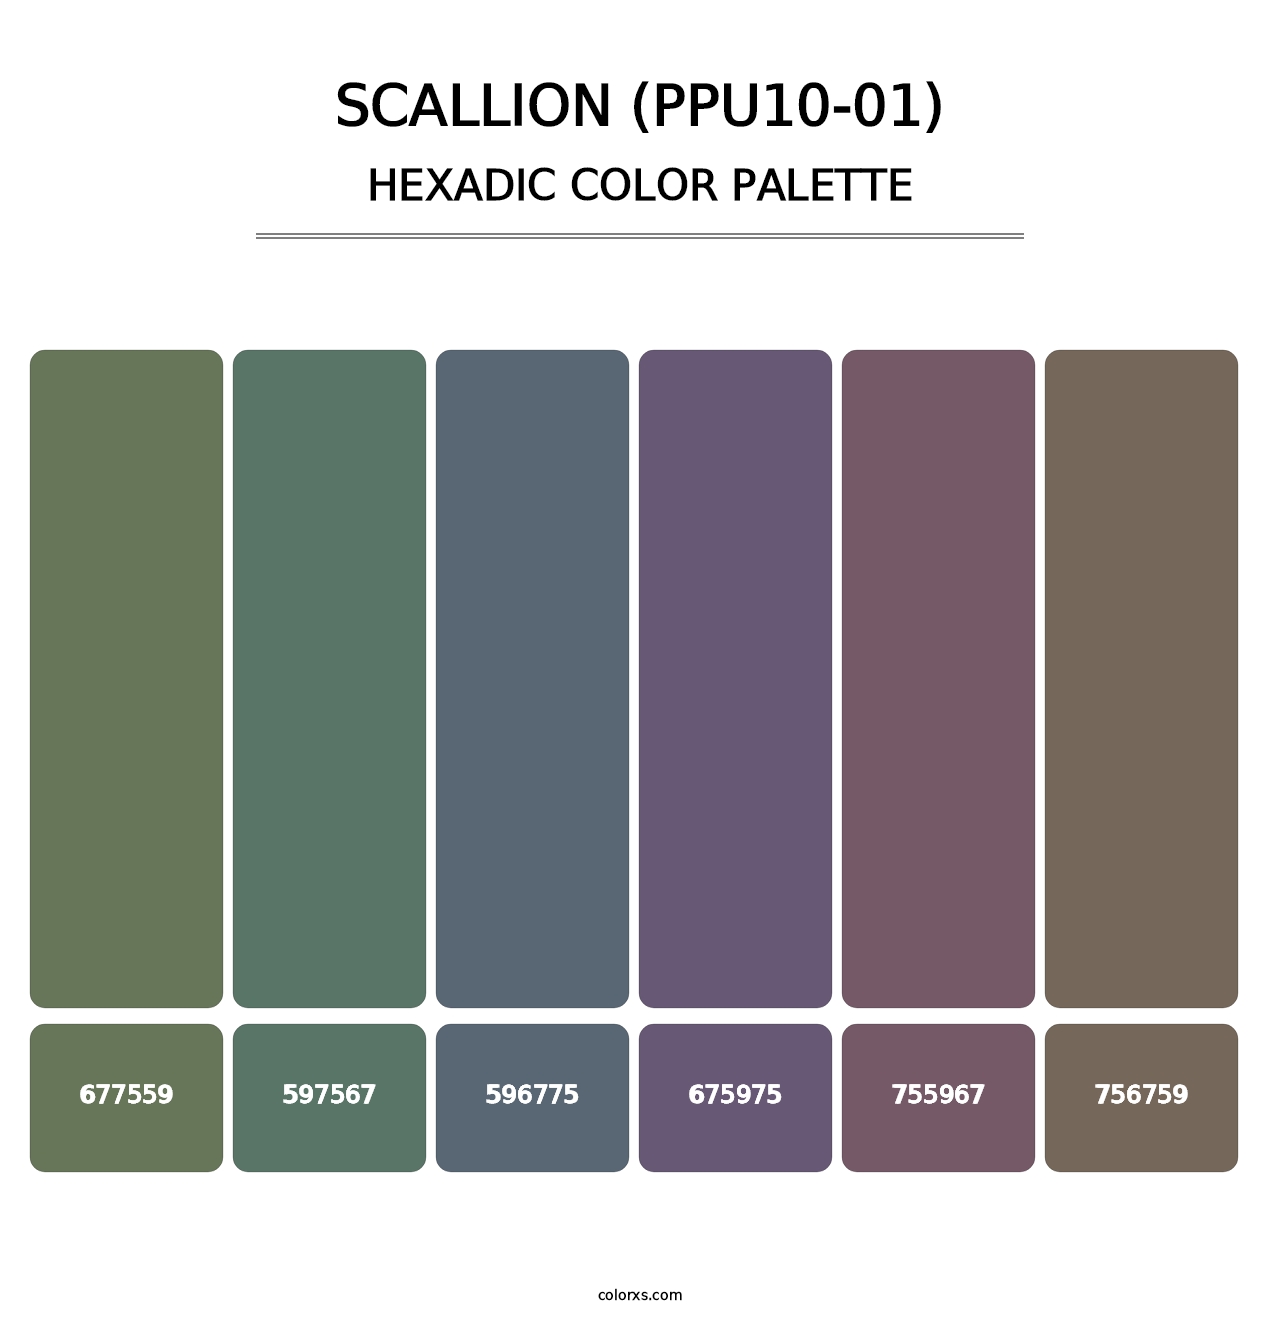 Scallion (PPU10-01) - Hexadic Color Palette